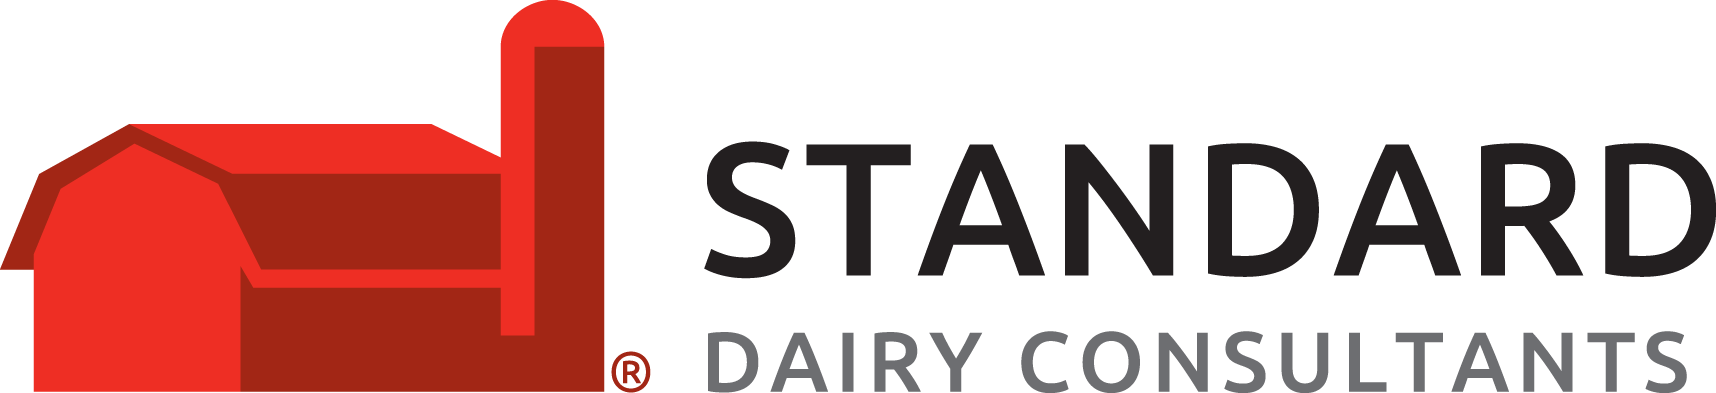 Standard Dairy Consultants